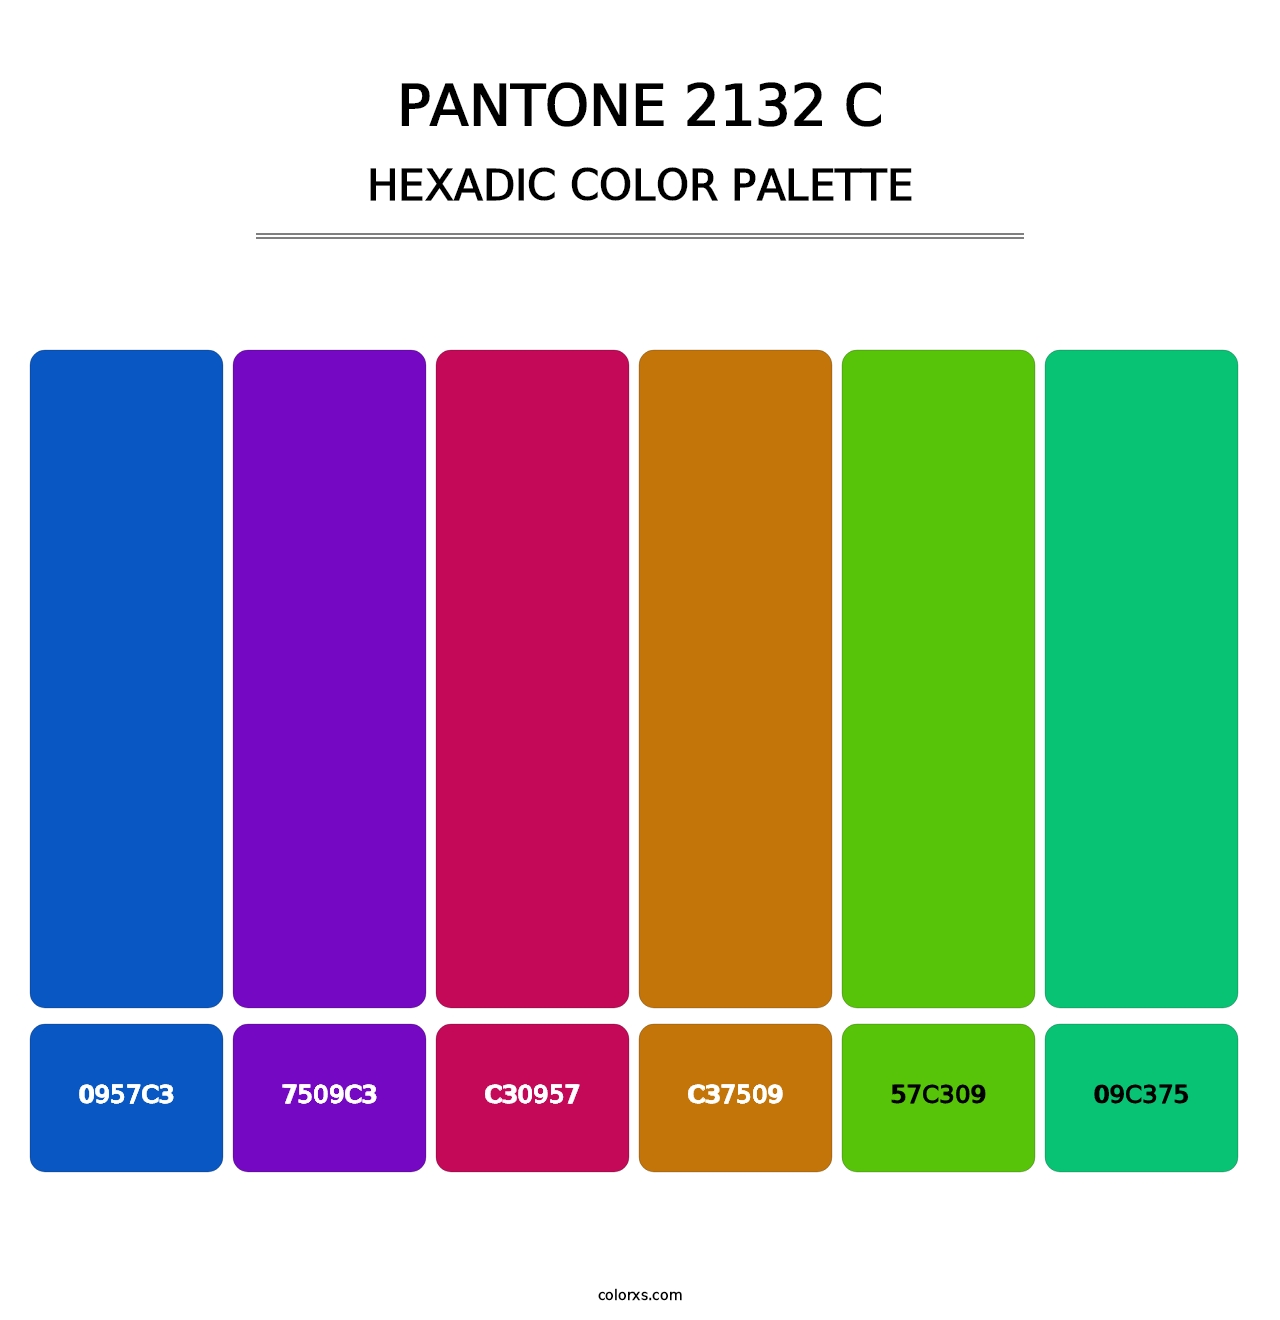 PANTONE 2132 C - Hexadic Color Palette